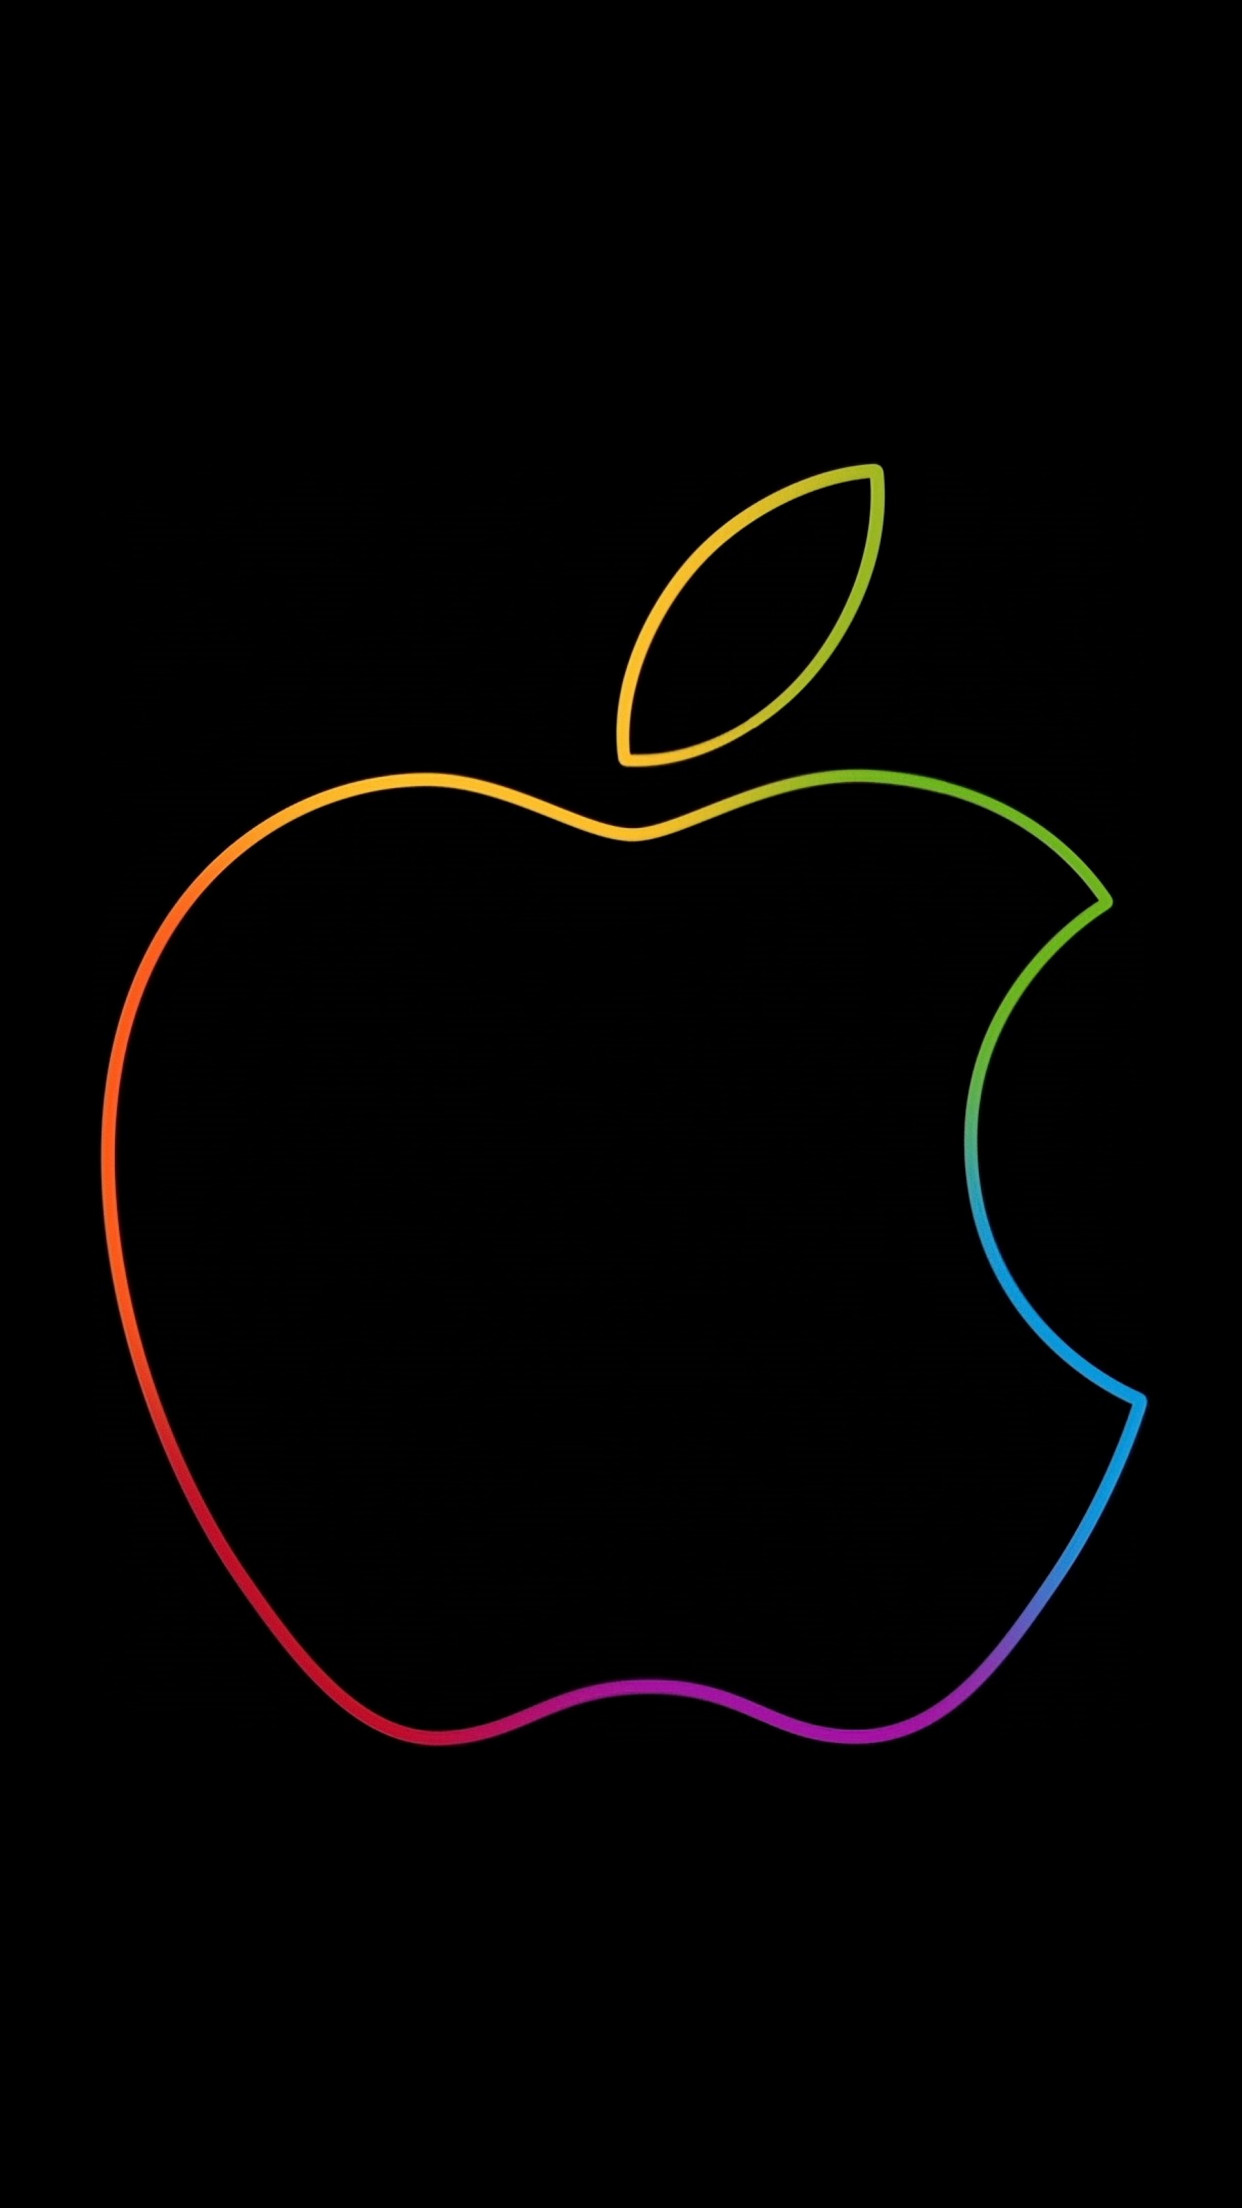 The famous Apple logo wallpaper 1242x2208